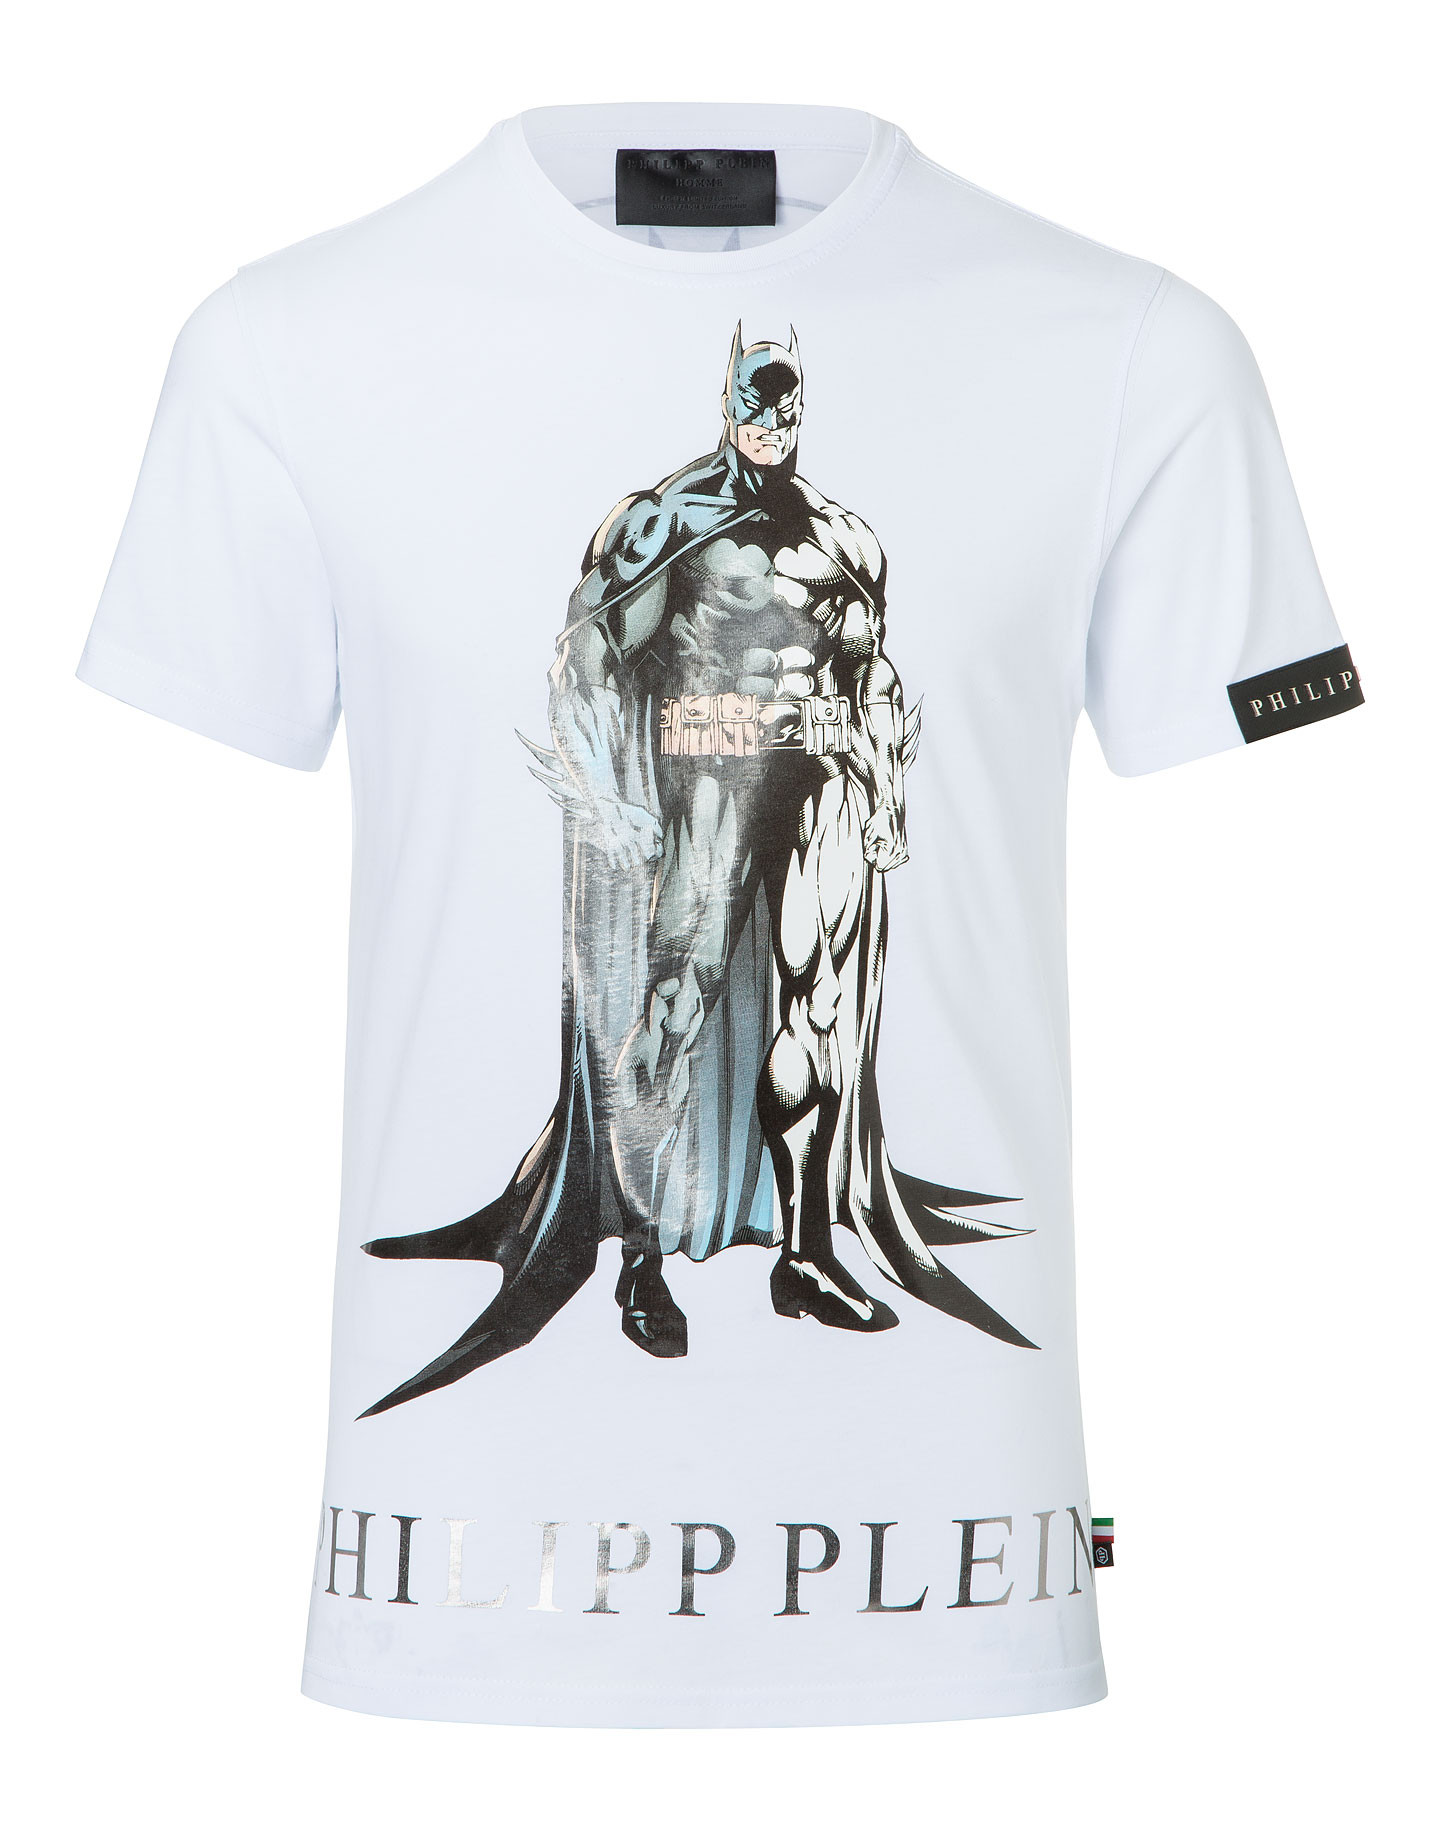 philipp plein t shirt batman